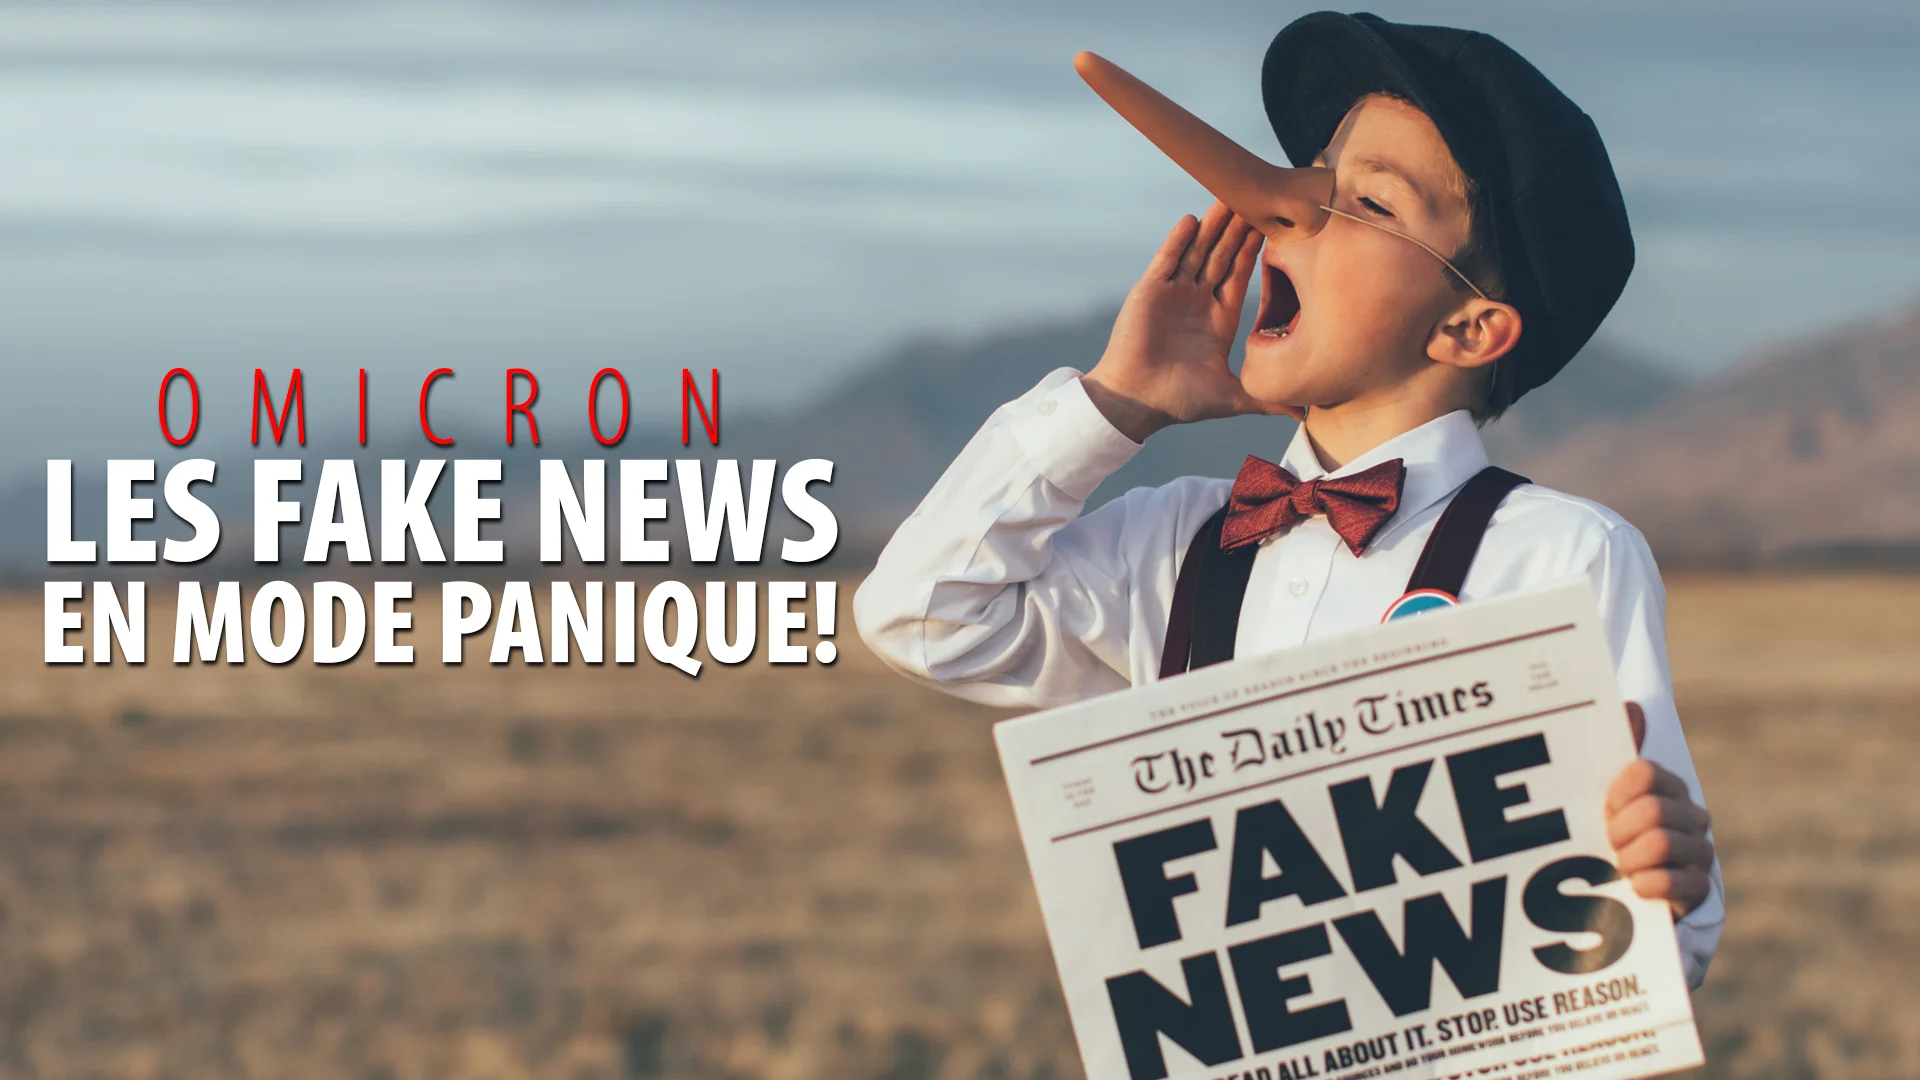 OMICRON – LES FAKE NEWS EN MODE PANIQUE!